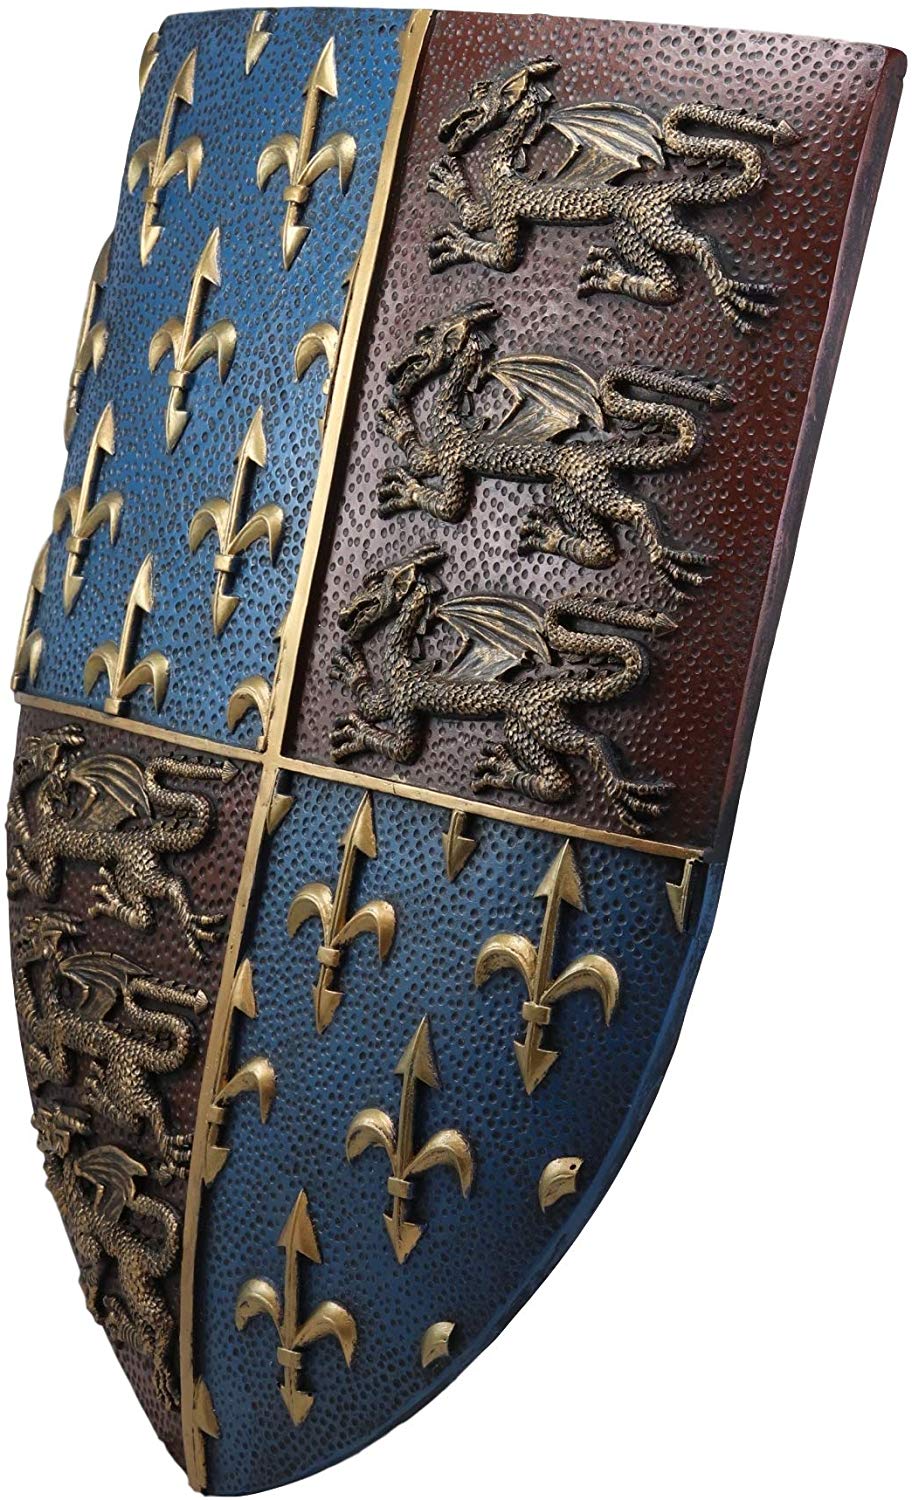 Ebros Gift Large Medieval Kingdom Knight Coat of Arms Le Fleur Symbols